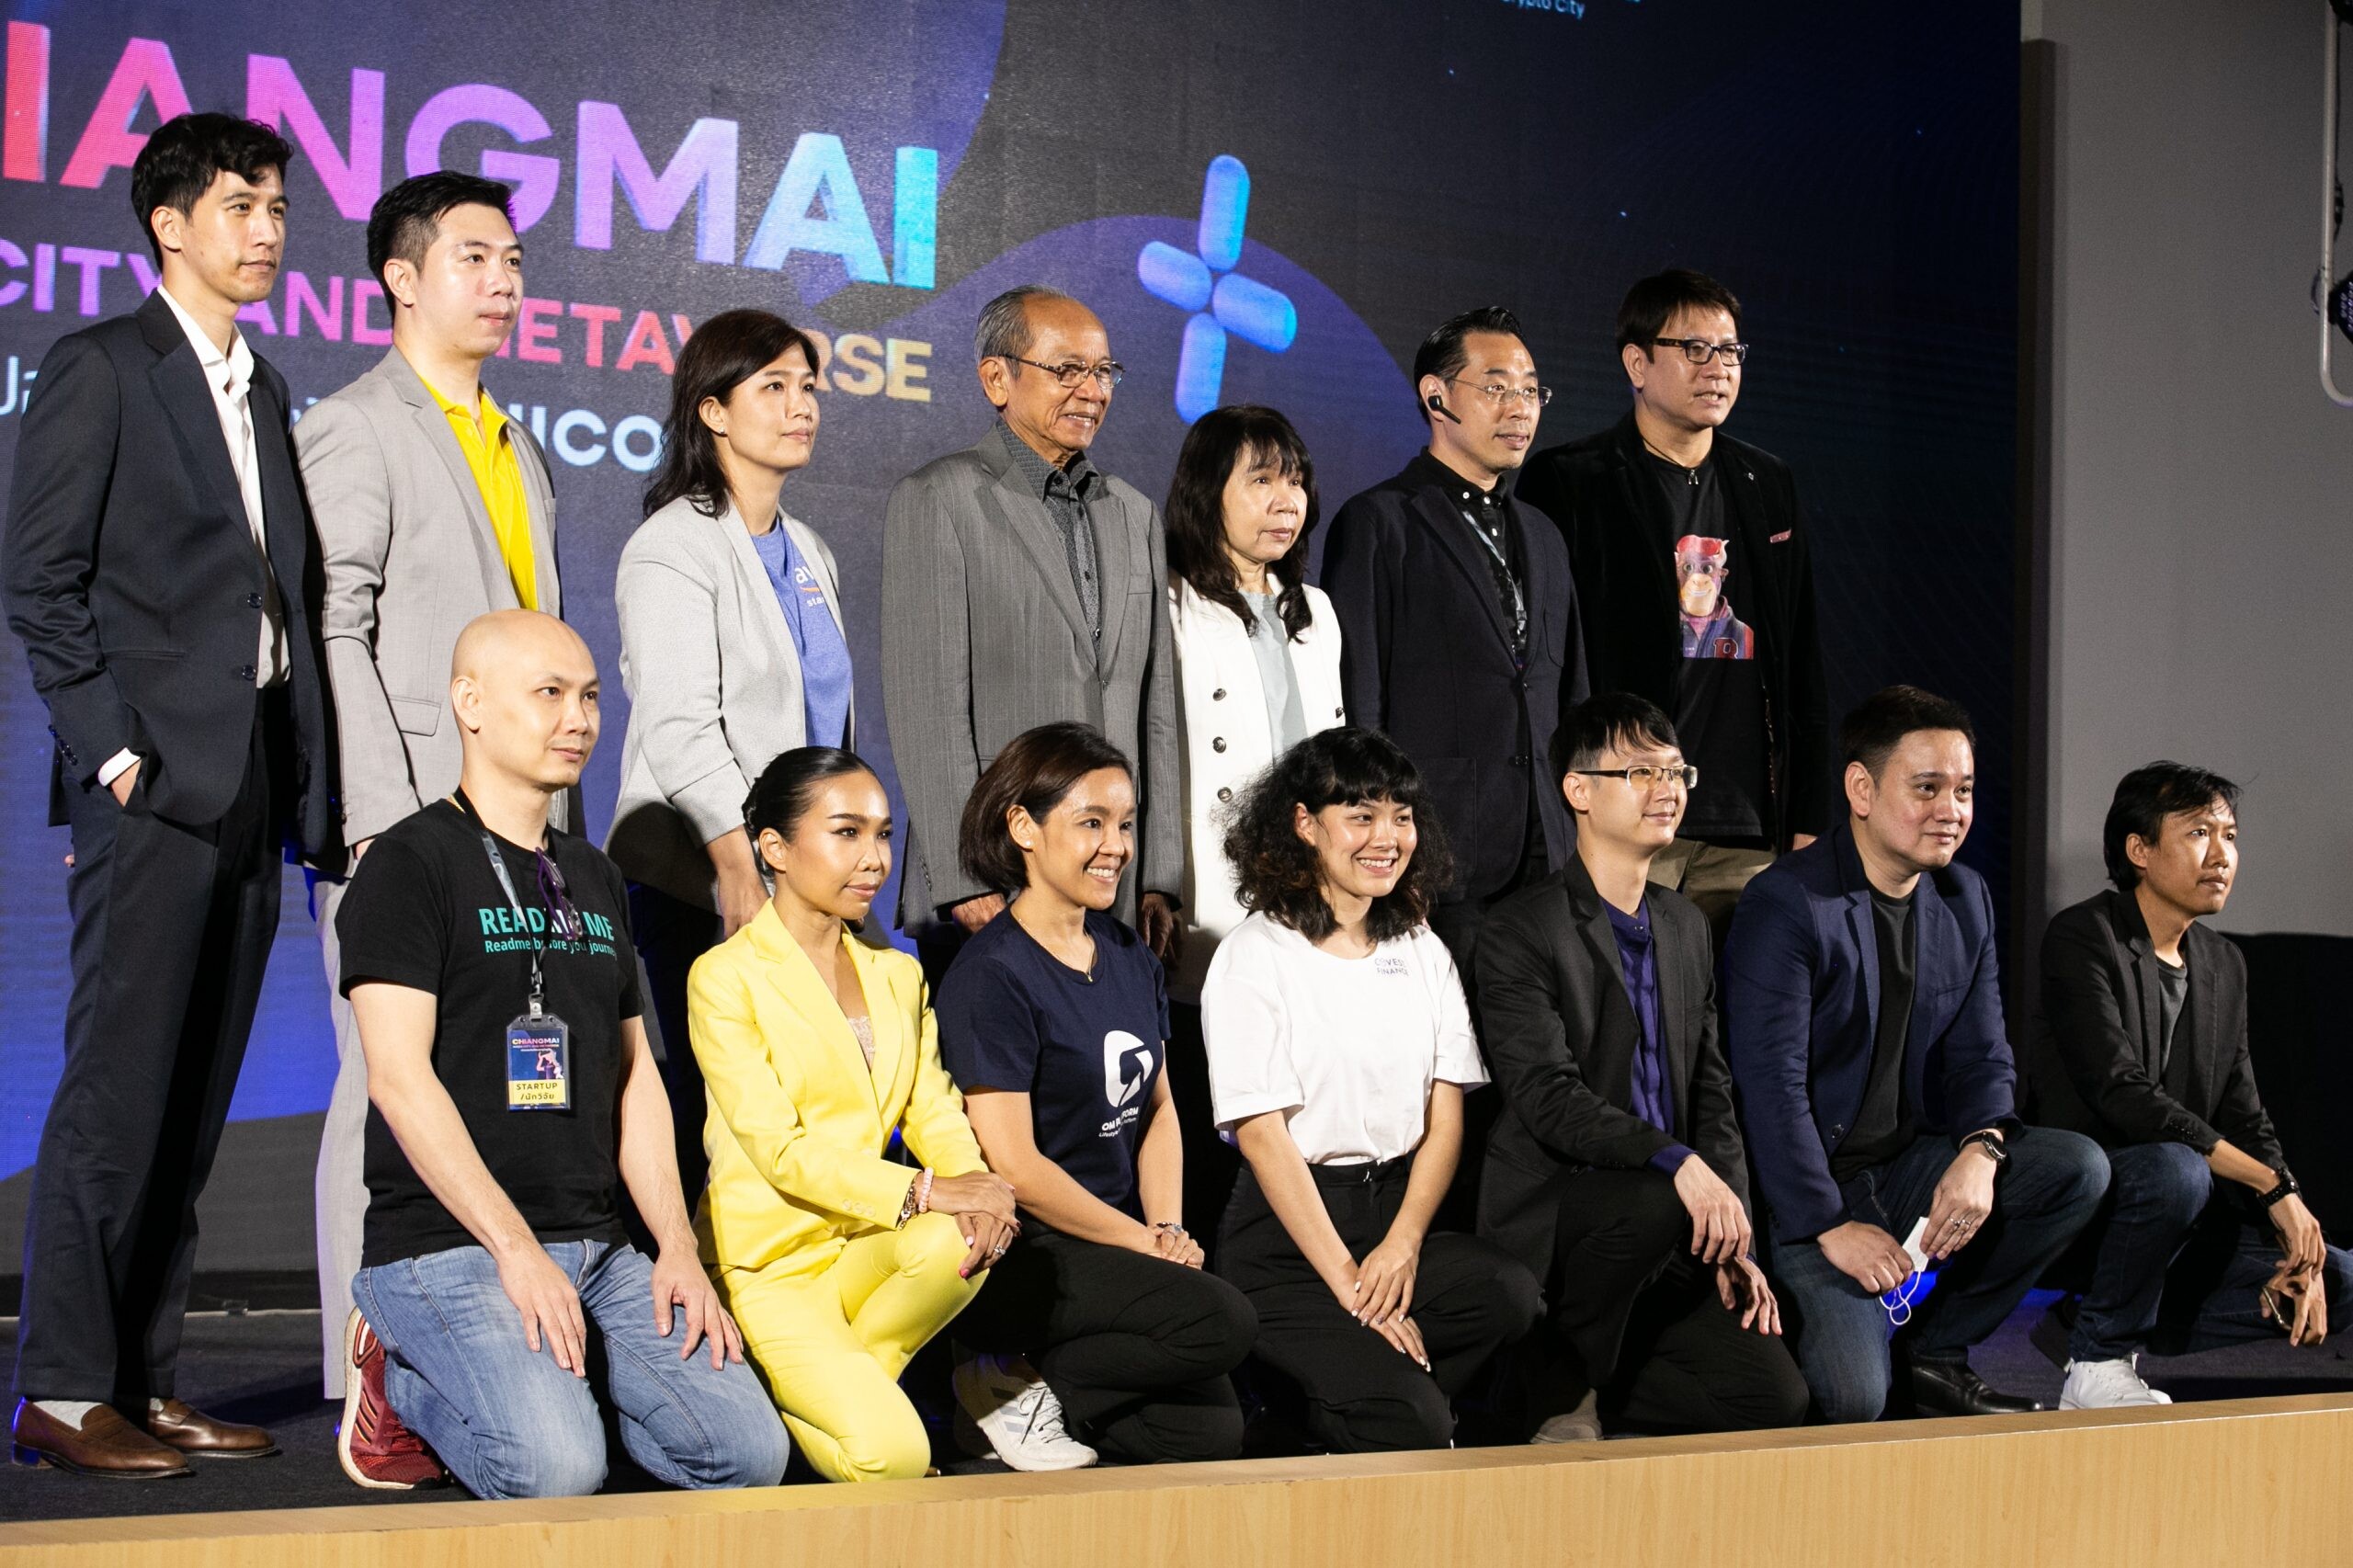 TVDH ส่ง eatsHUB ร่วมงาน "Chiangmai Web3 City and Metaverse" เฟ้นหาโอกาสและการลงทุนในเทคโนโลยี 3.0